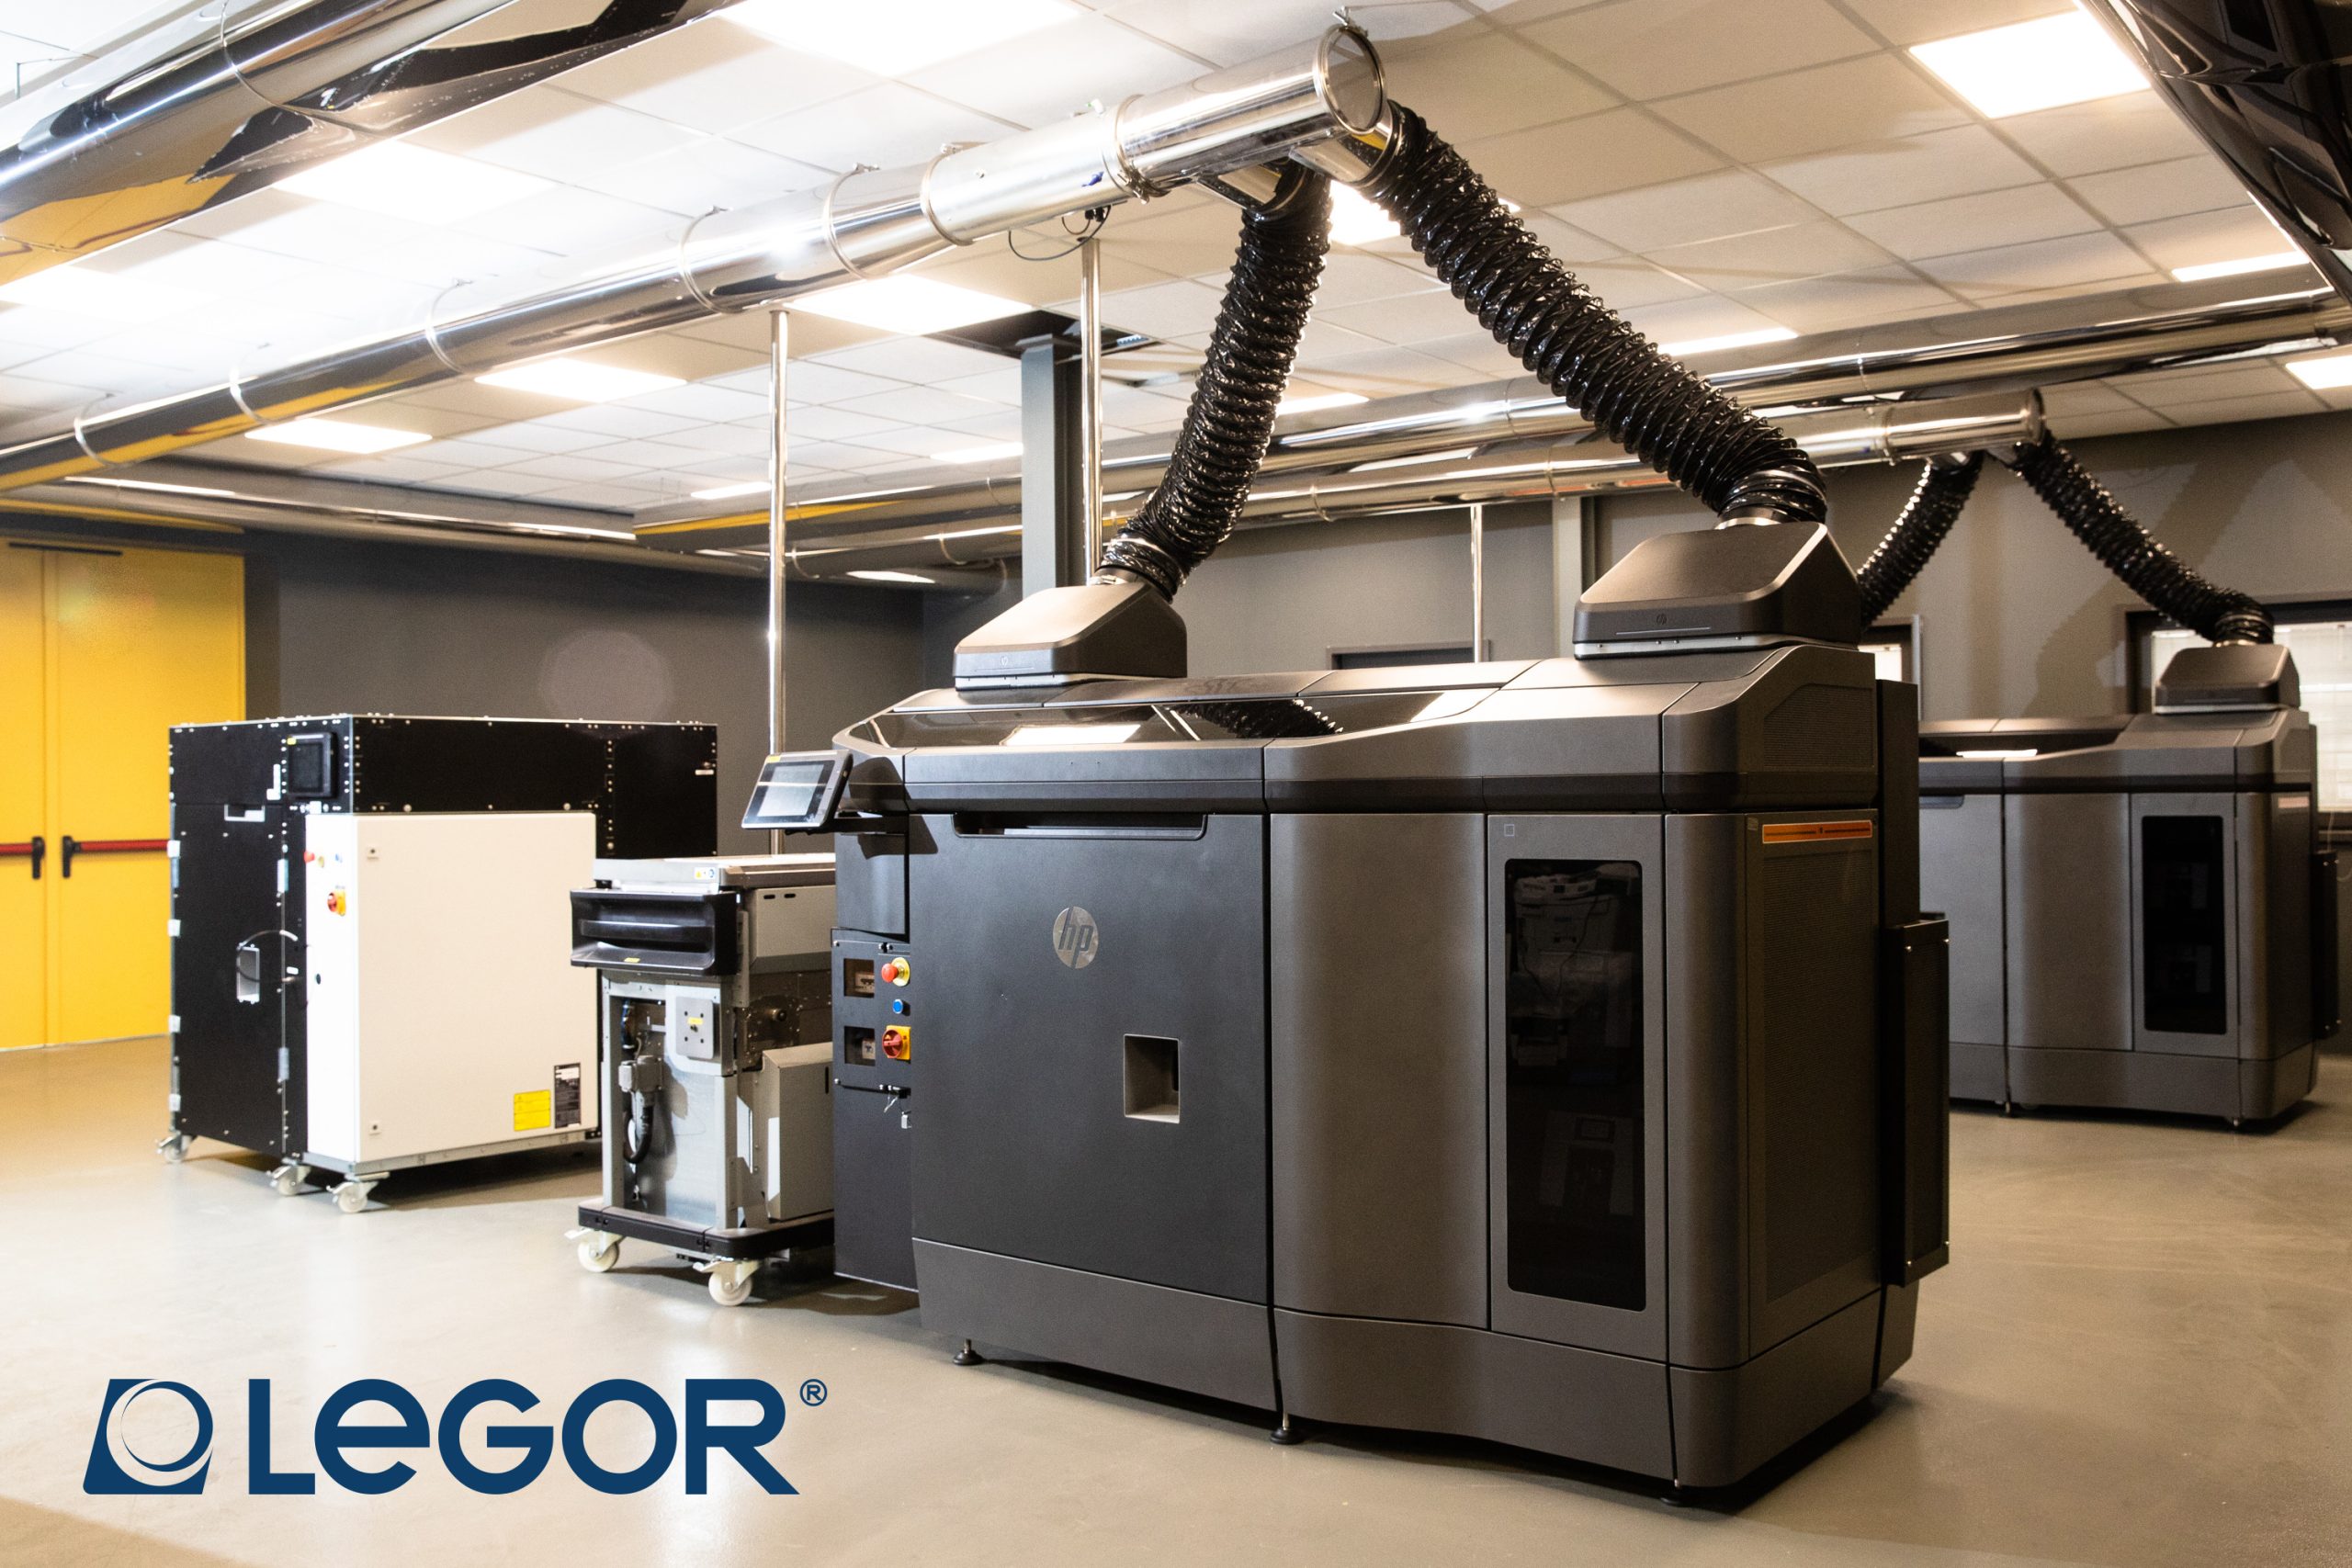 HP's Metal Jet 3D printing system at Legor's facility. Image via HP.